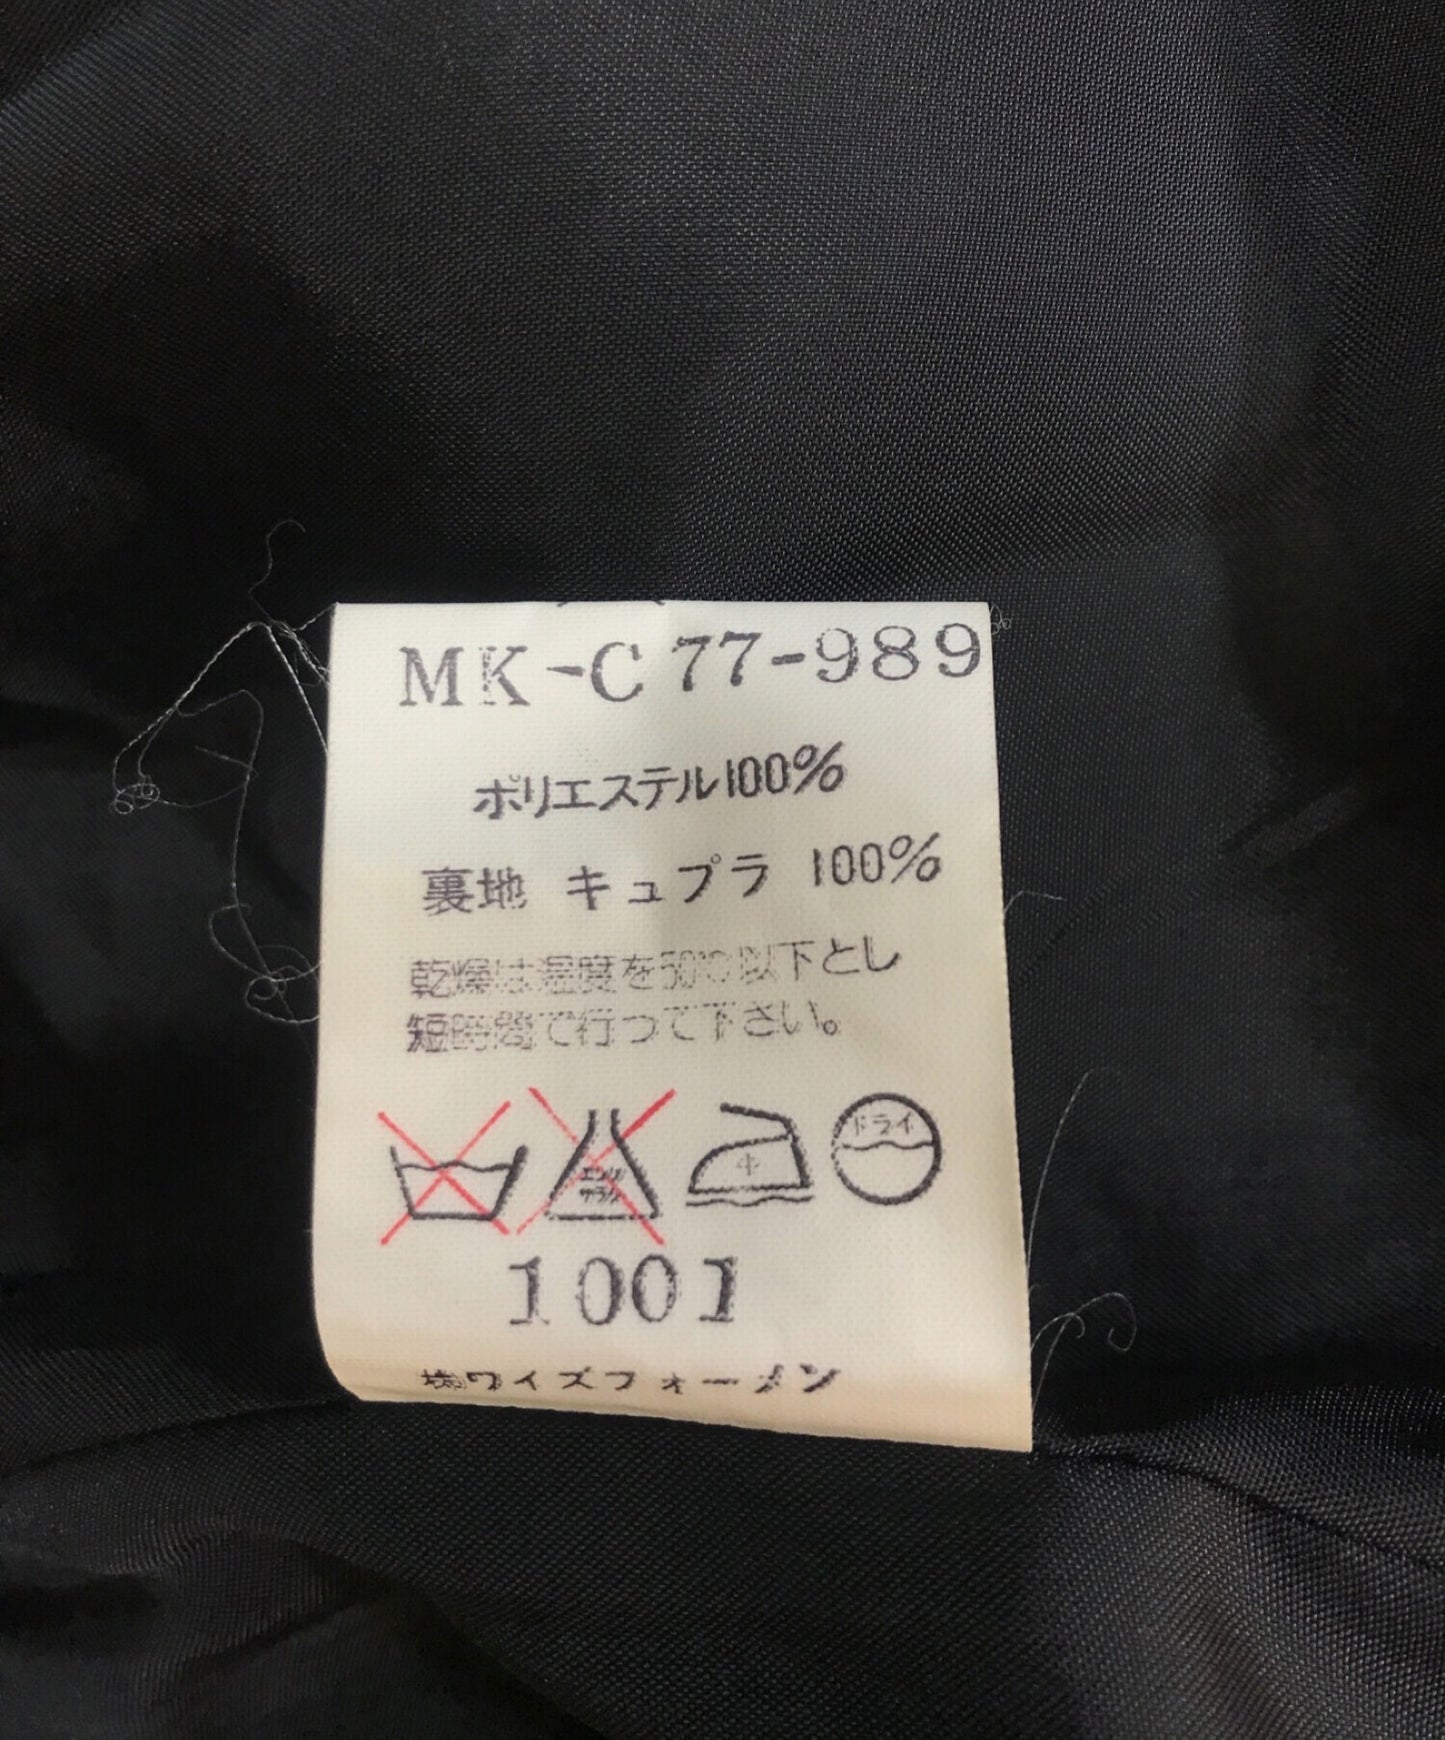 Yohji Yamamoto [二手]员工外套MK-C77-989